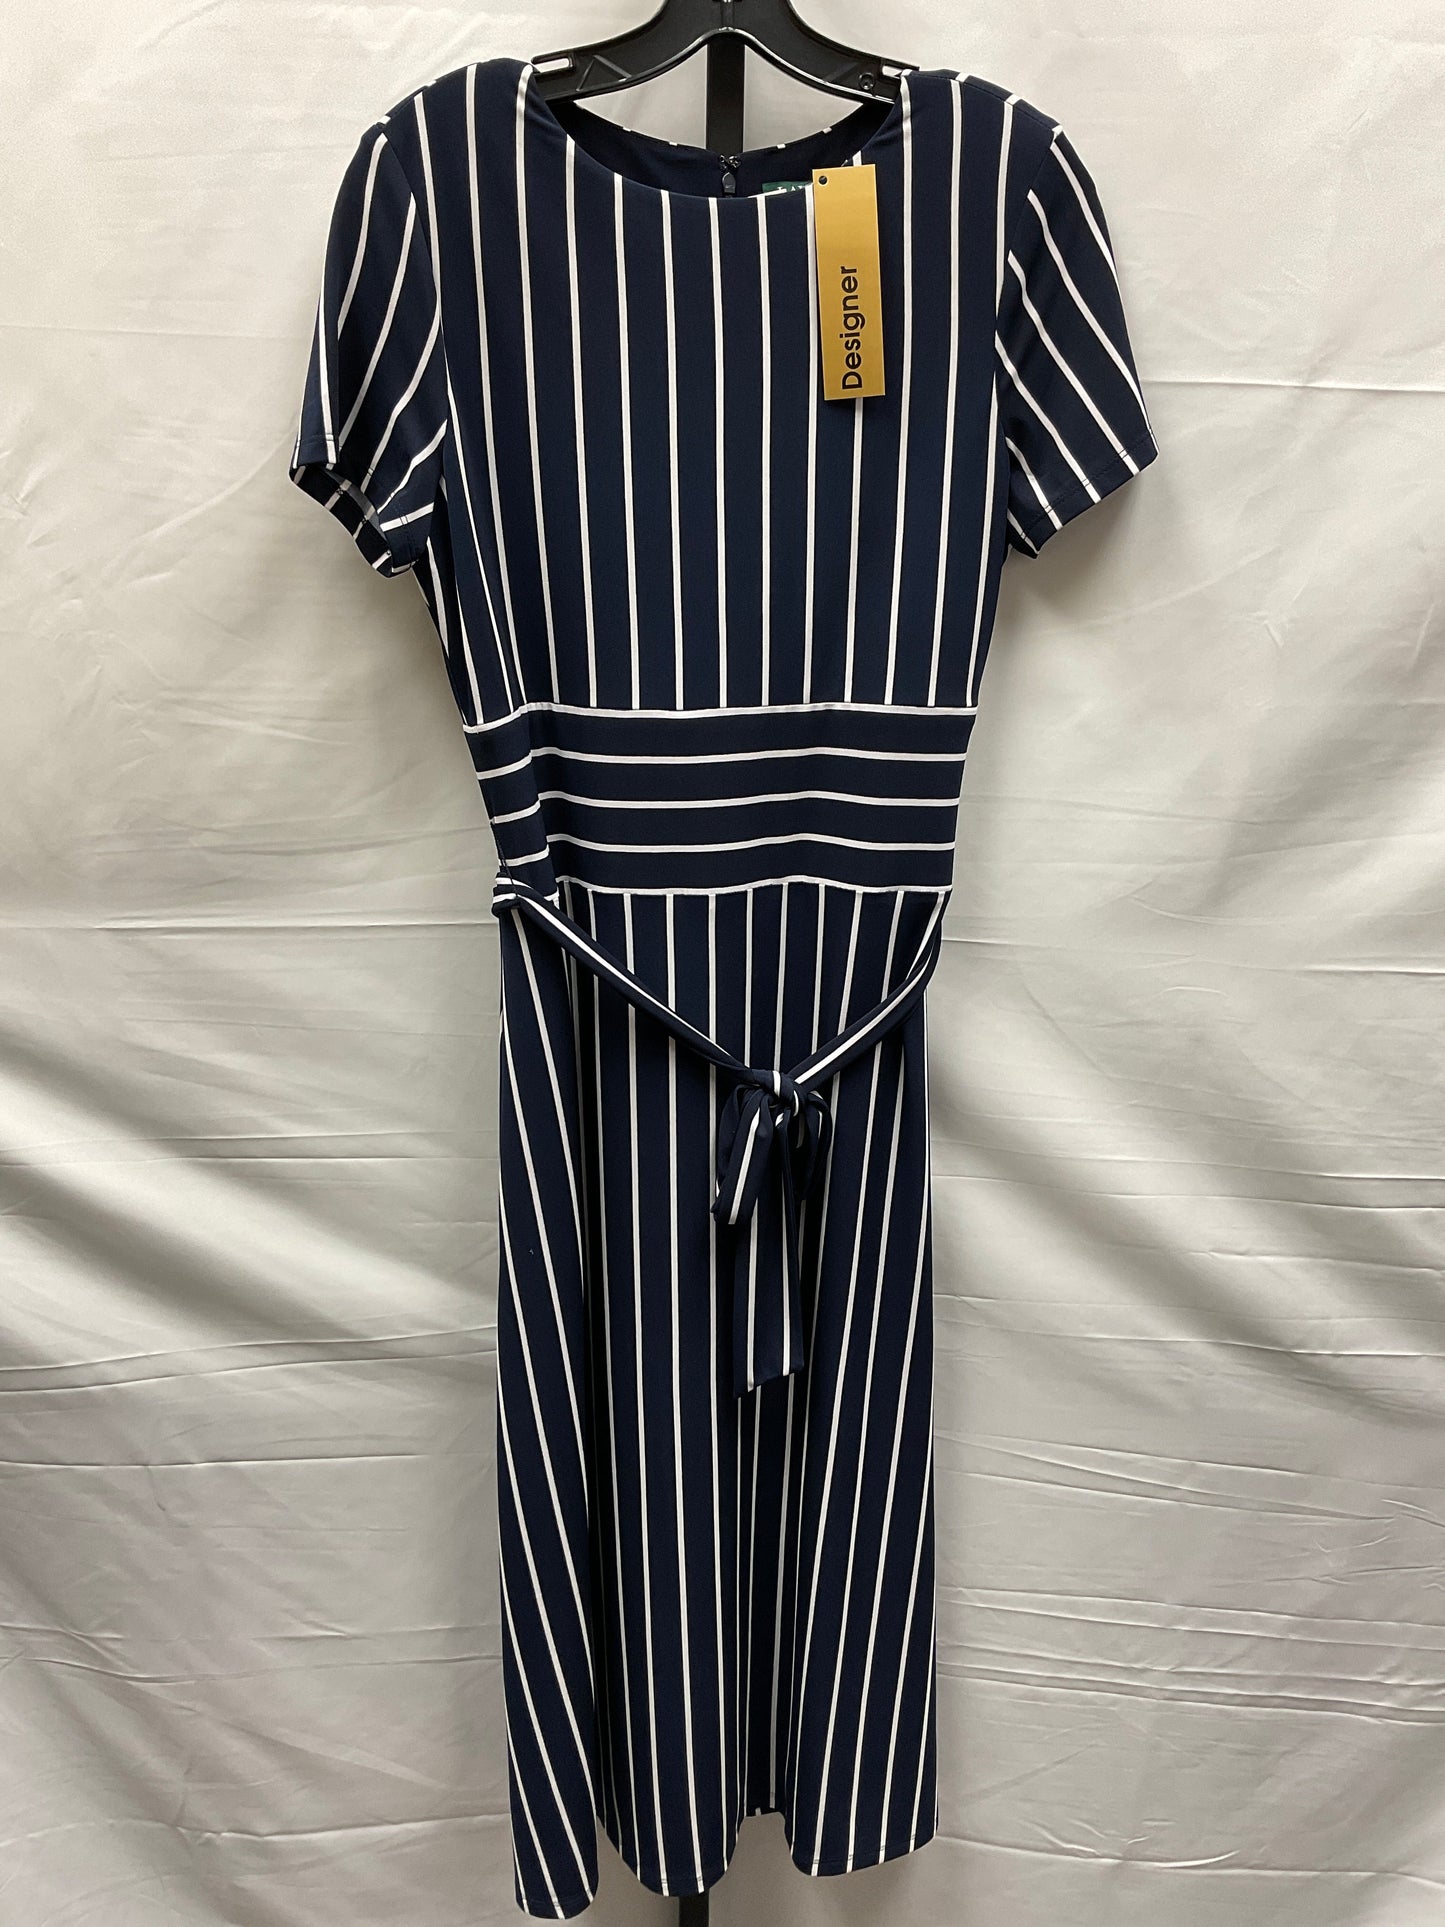 Striped Pattern Dress Designer Lauren By Ralph Lauren, Size M